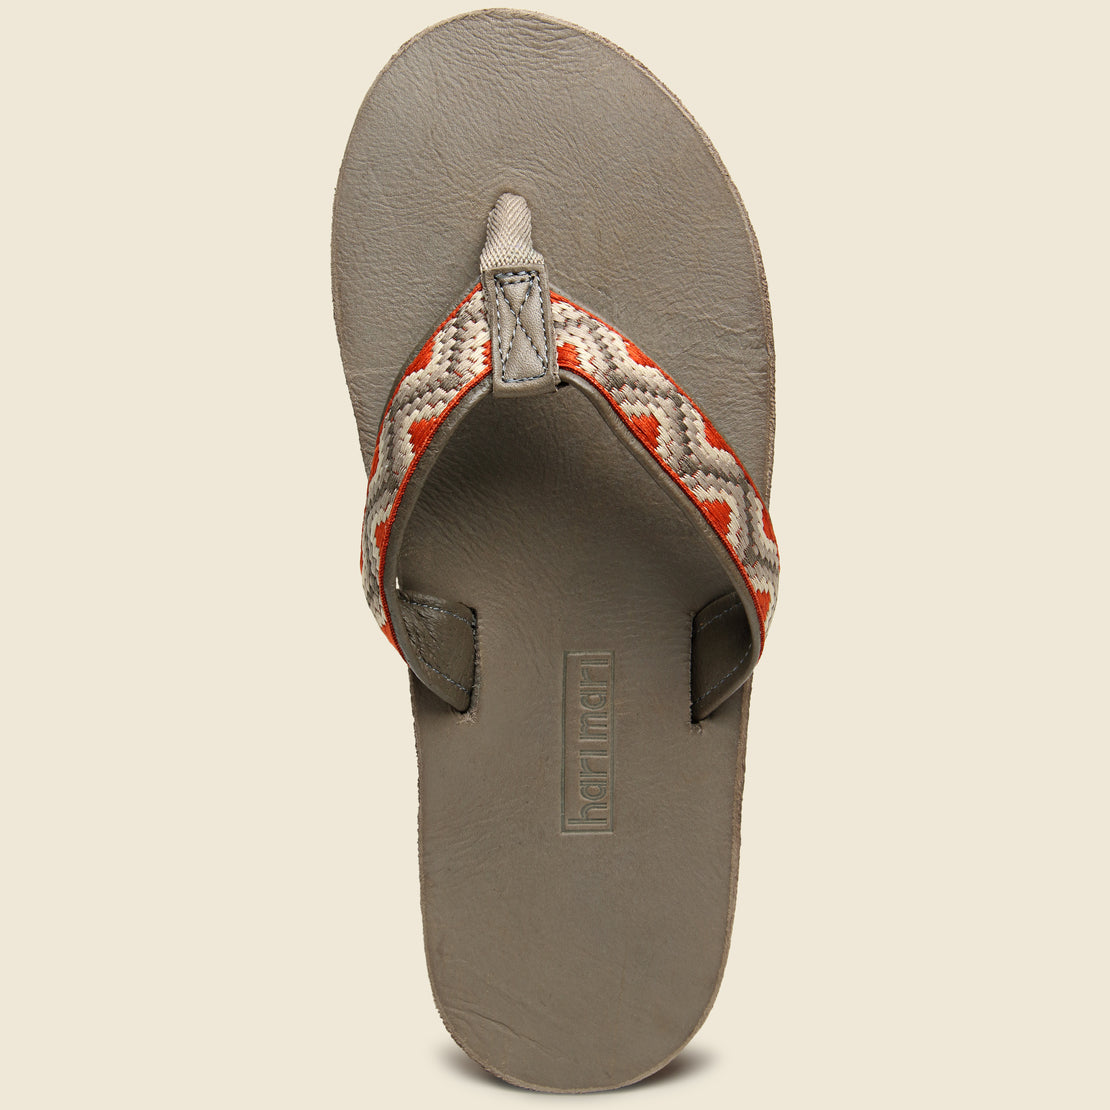 Fields Camino Flip Flop - Ash - Hari Mari - STAG Provisions - Shoes - Sandals / Flops